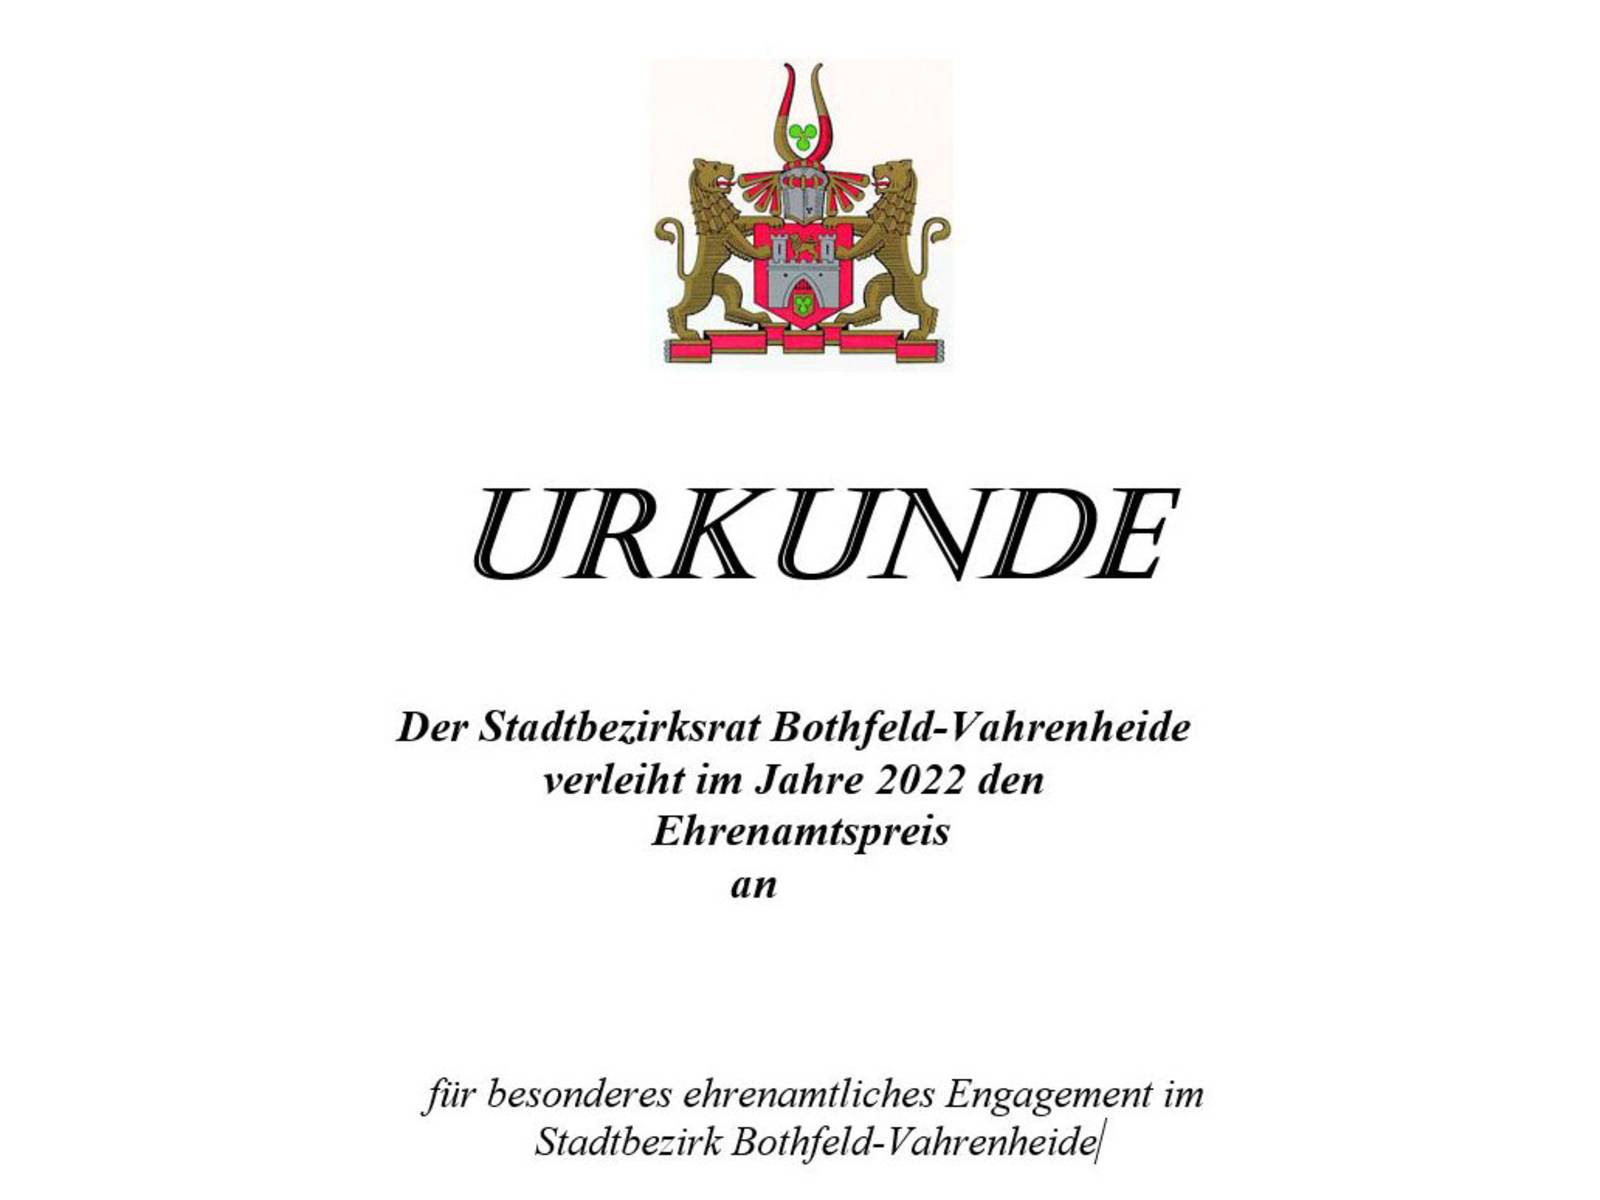 Ehrenamtspreis 2022 des Stadtbezirksrates Bothfeld-Vahrenheide